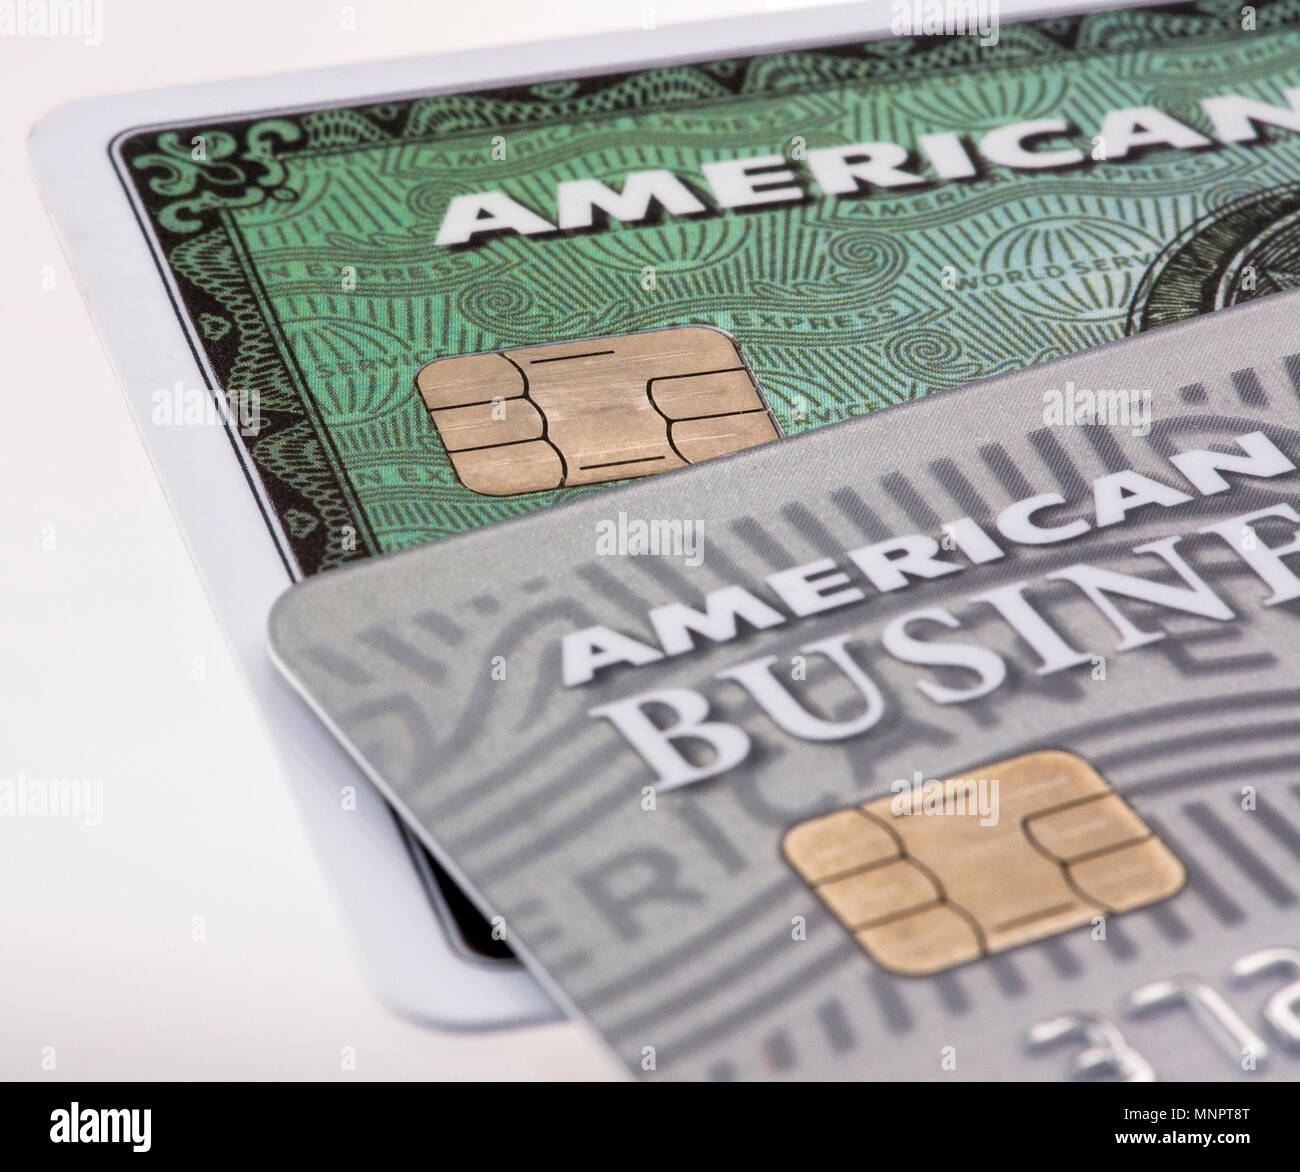 american-express-emv-chip-cards-stock-photo-alamy